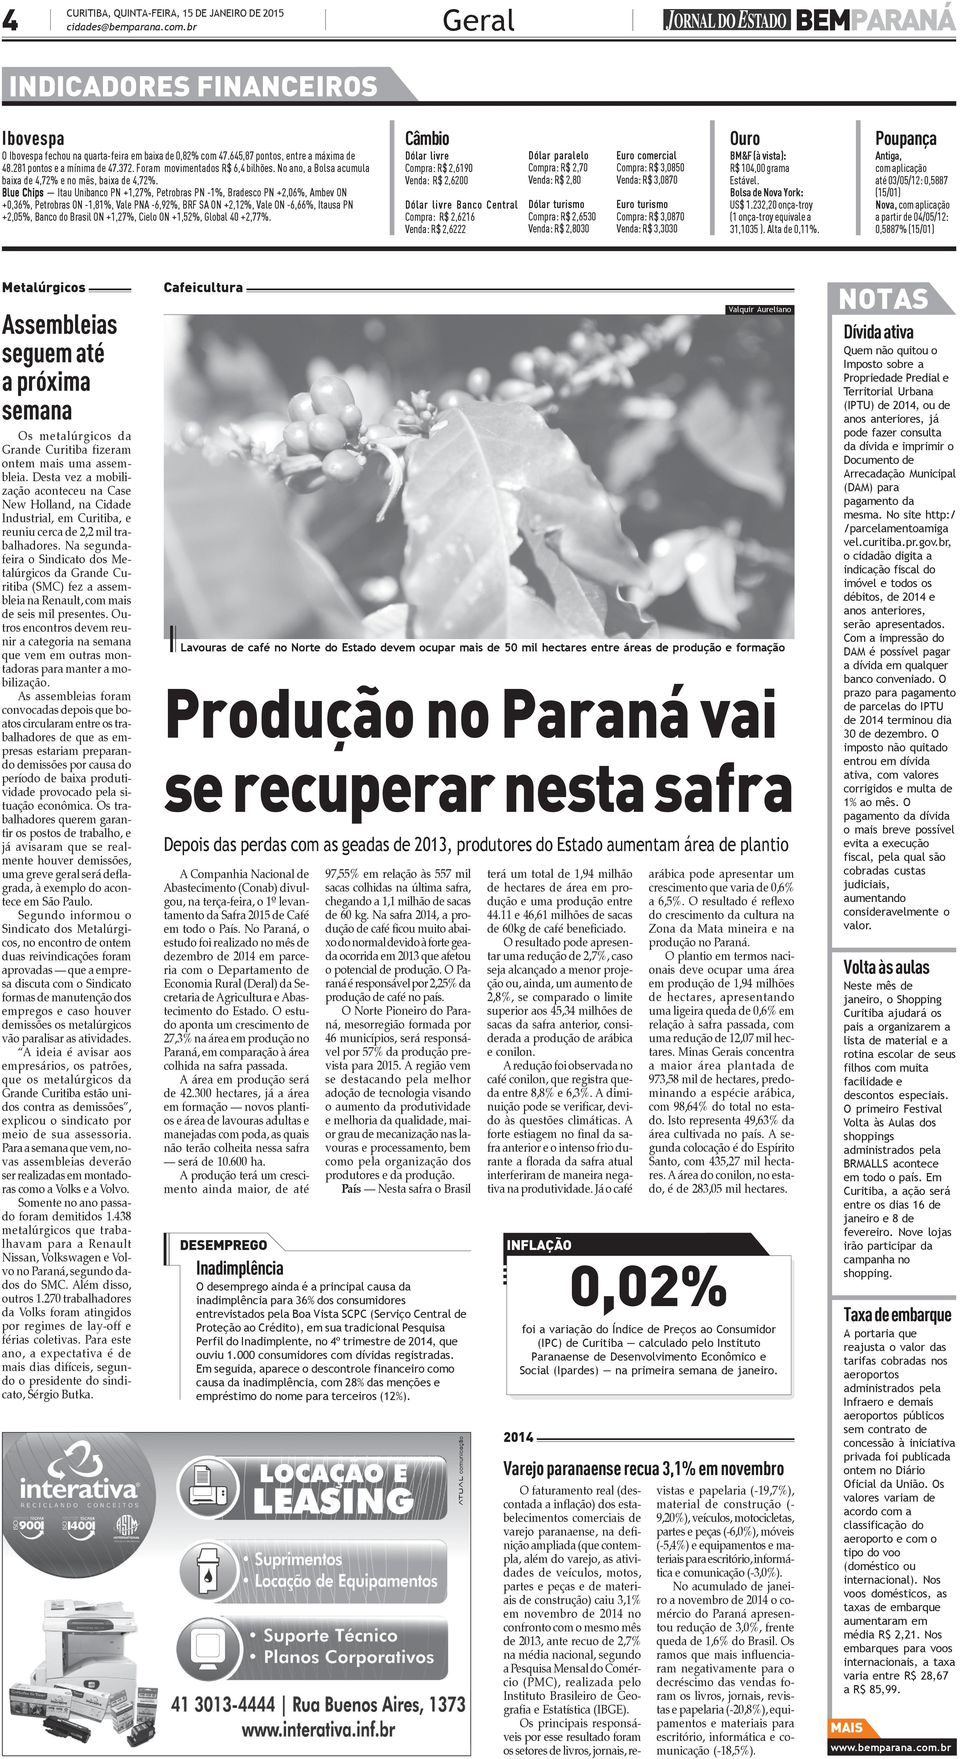 Blue Chips Itau Unibanco PN +1,27%, Petrobras PN -1%, Bradesco PN +2,06%, Ambev ON +0,36%, Petrobras ON -1,81%, Vale PNA -6,92%, BRF SA ON +2,12%, Vale ON -6,66%, Itausa PN +2,05%, Banco do Brasil ON